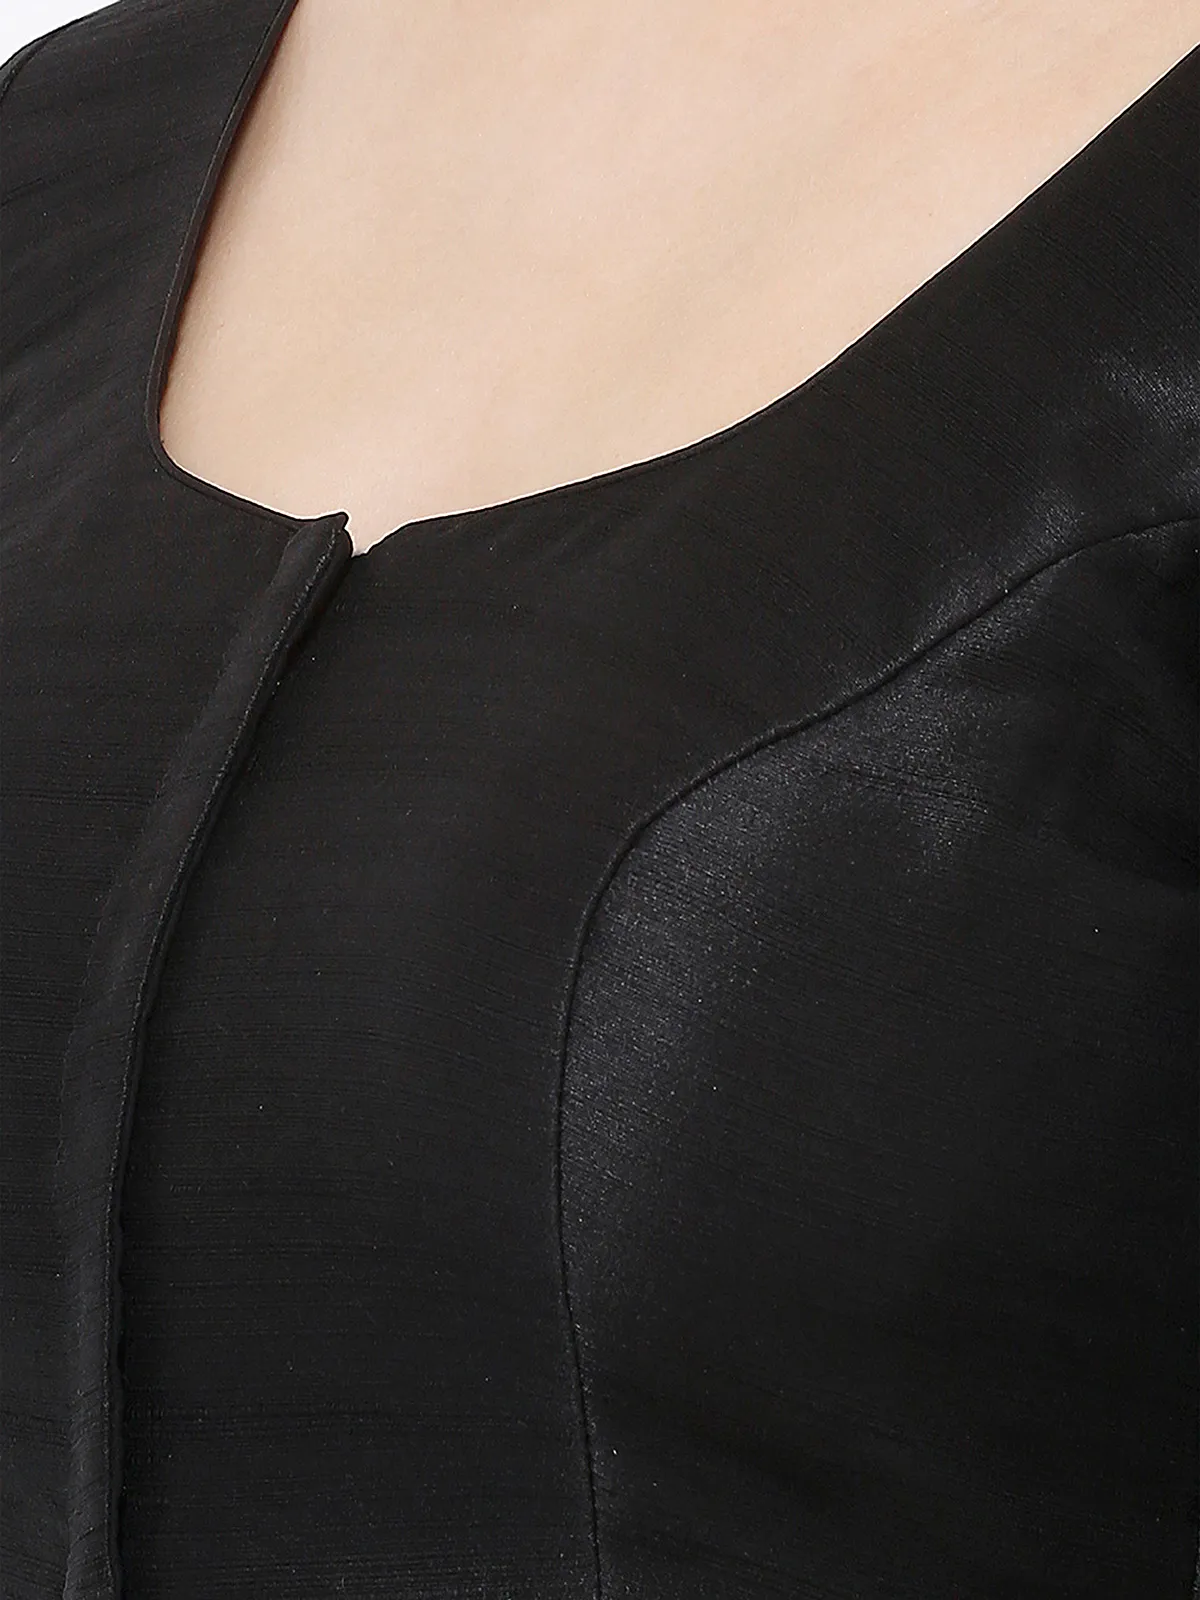 Silk black plain blouse